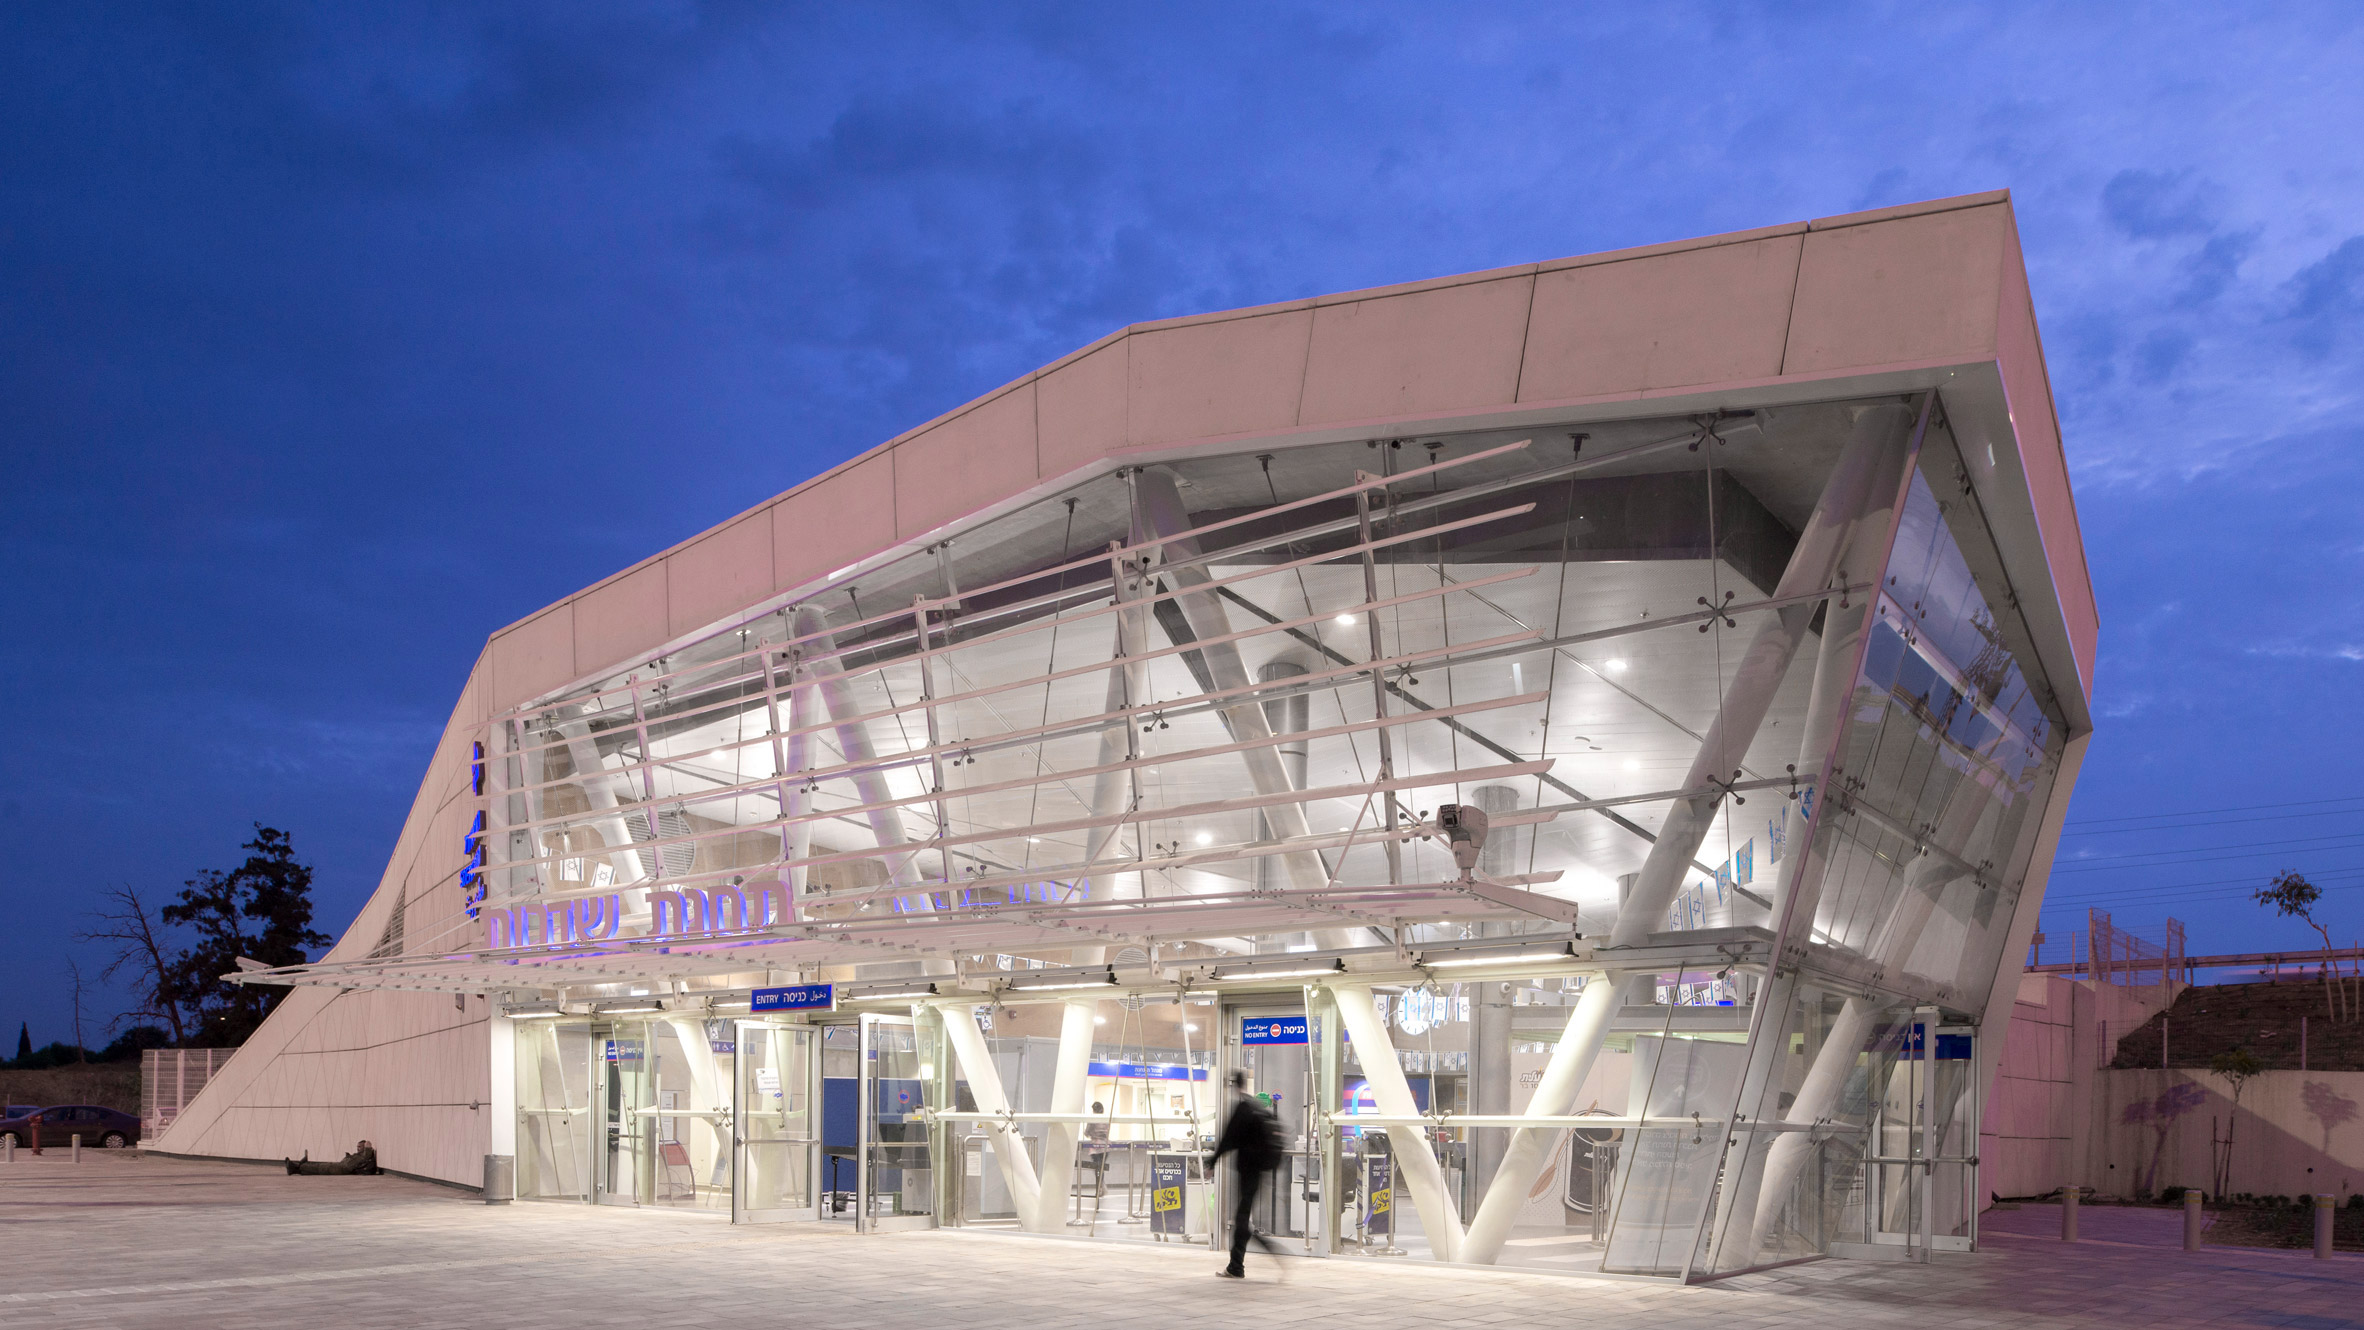 Sderot Train Station by Mann Shinar Architects